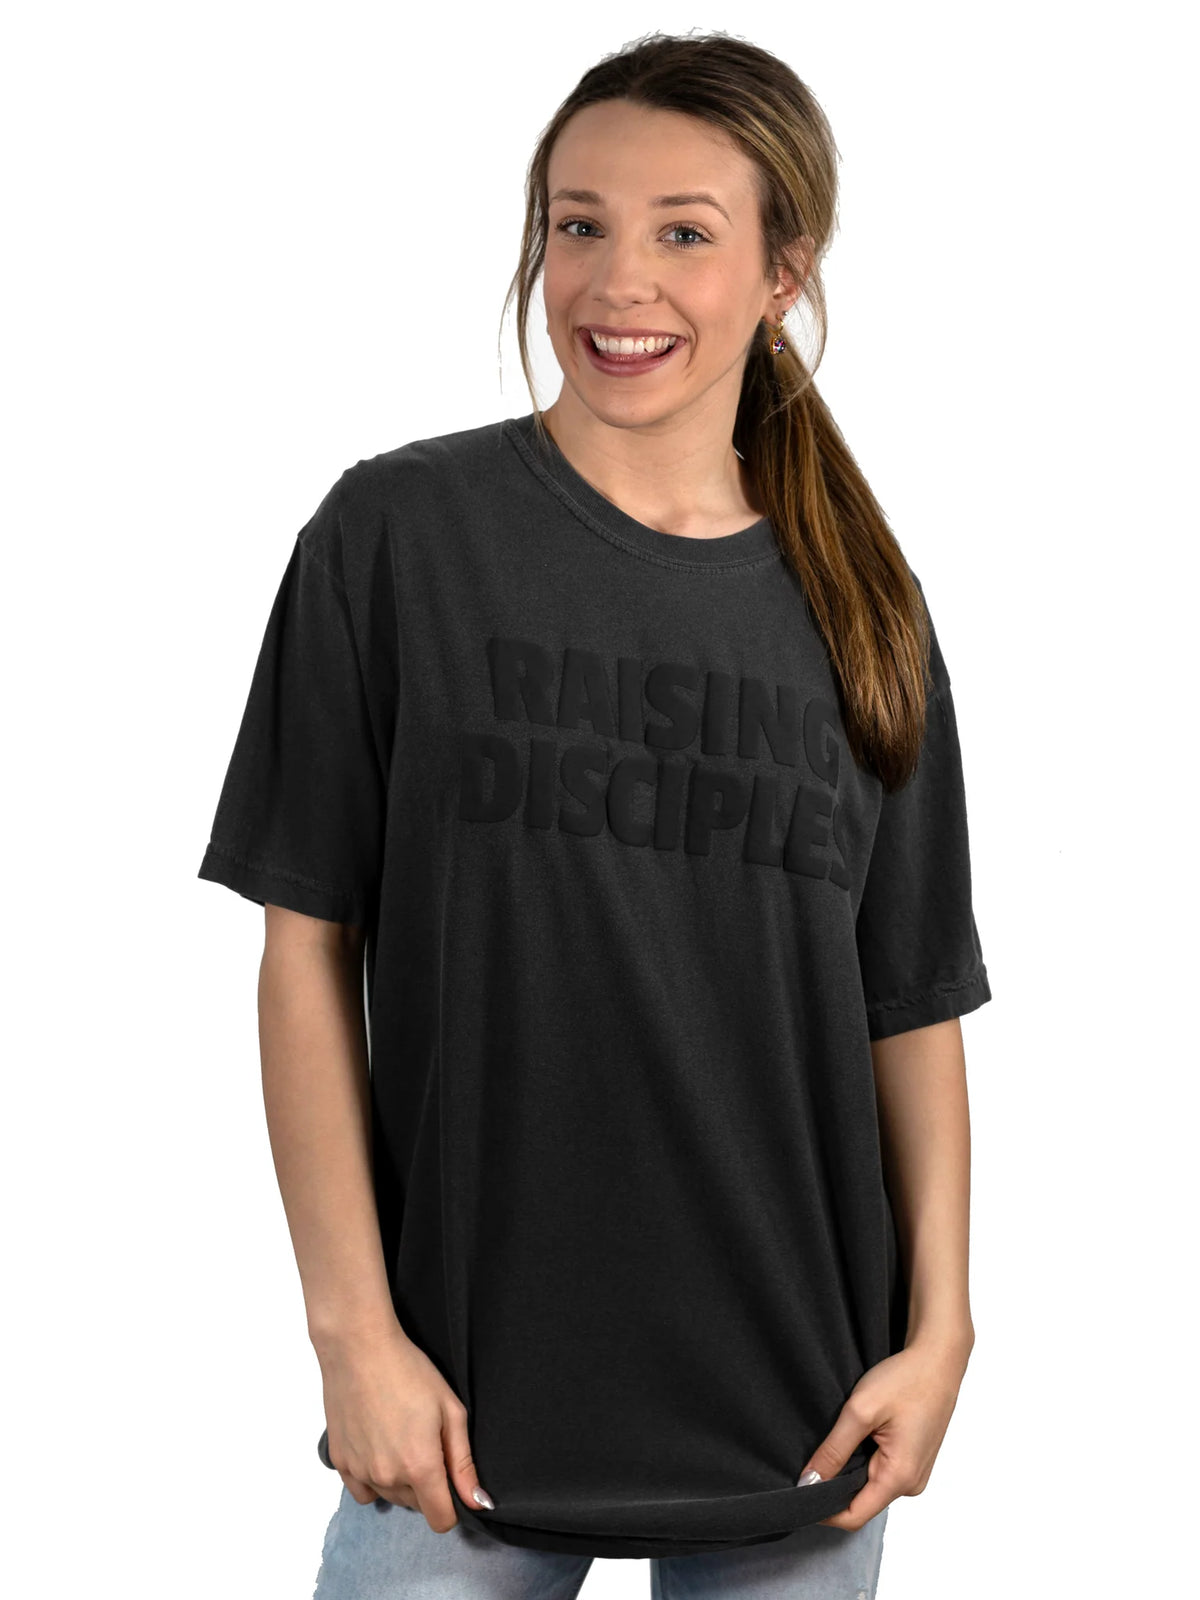 Raising Disciples T-Shirt